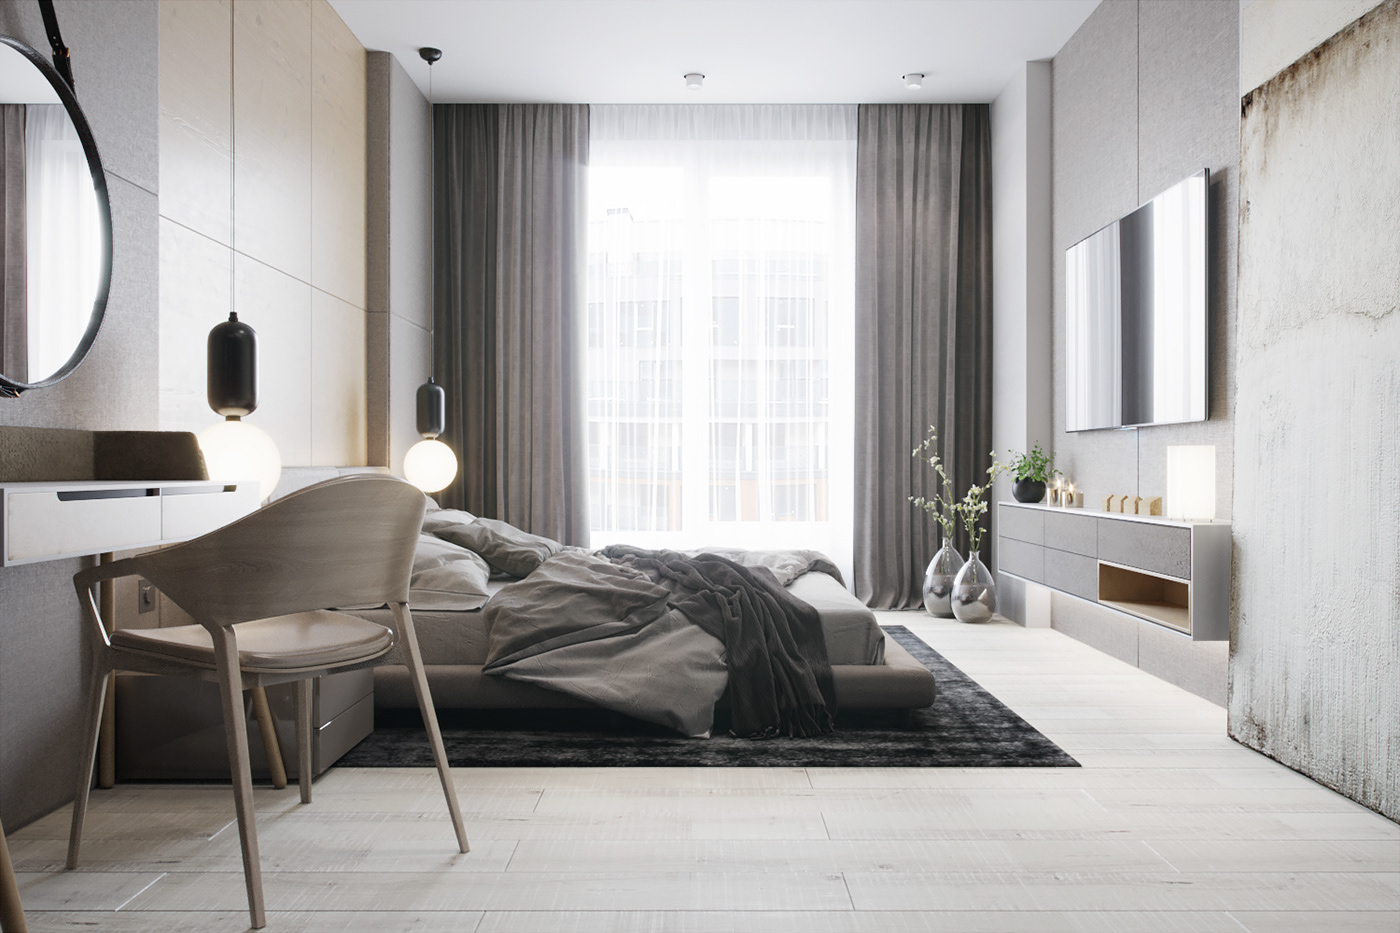 design bedroom 3d max corona render  Kyiv minimalizm design kyiv architecture kiev Interior